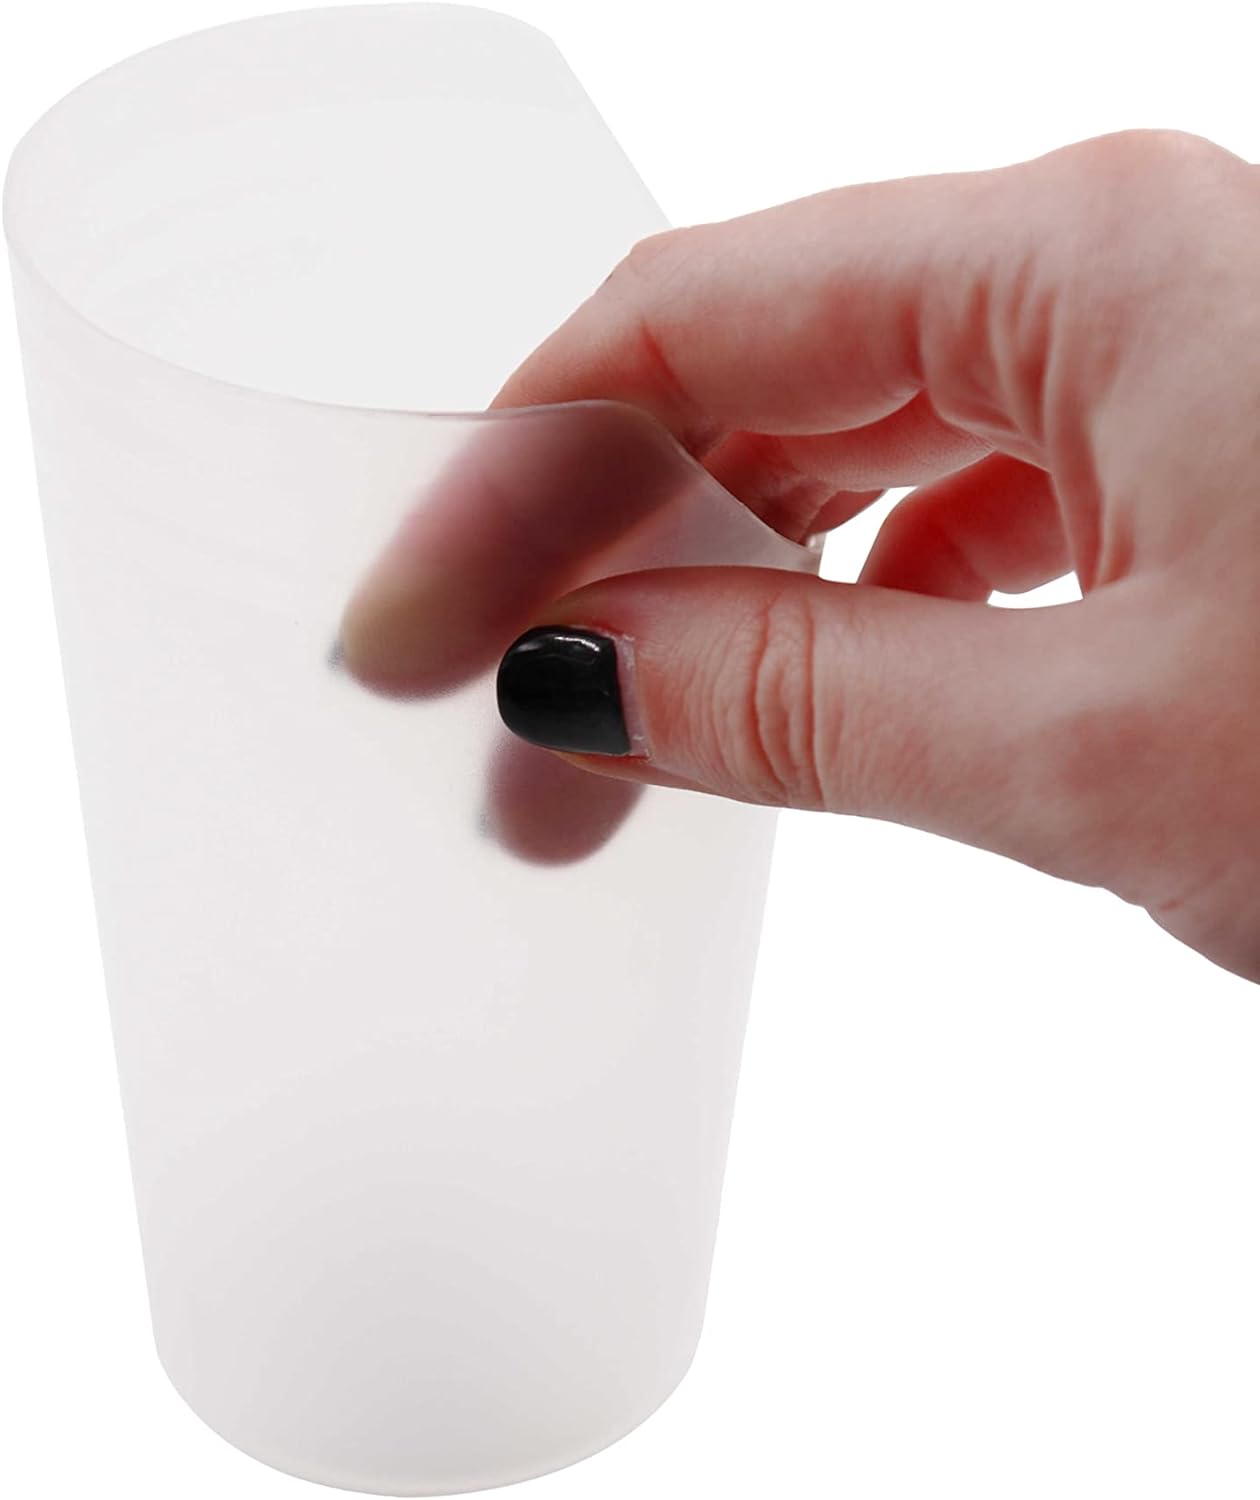 Vaso taza para deglución segura disfagia